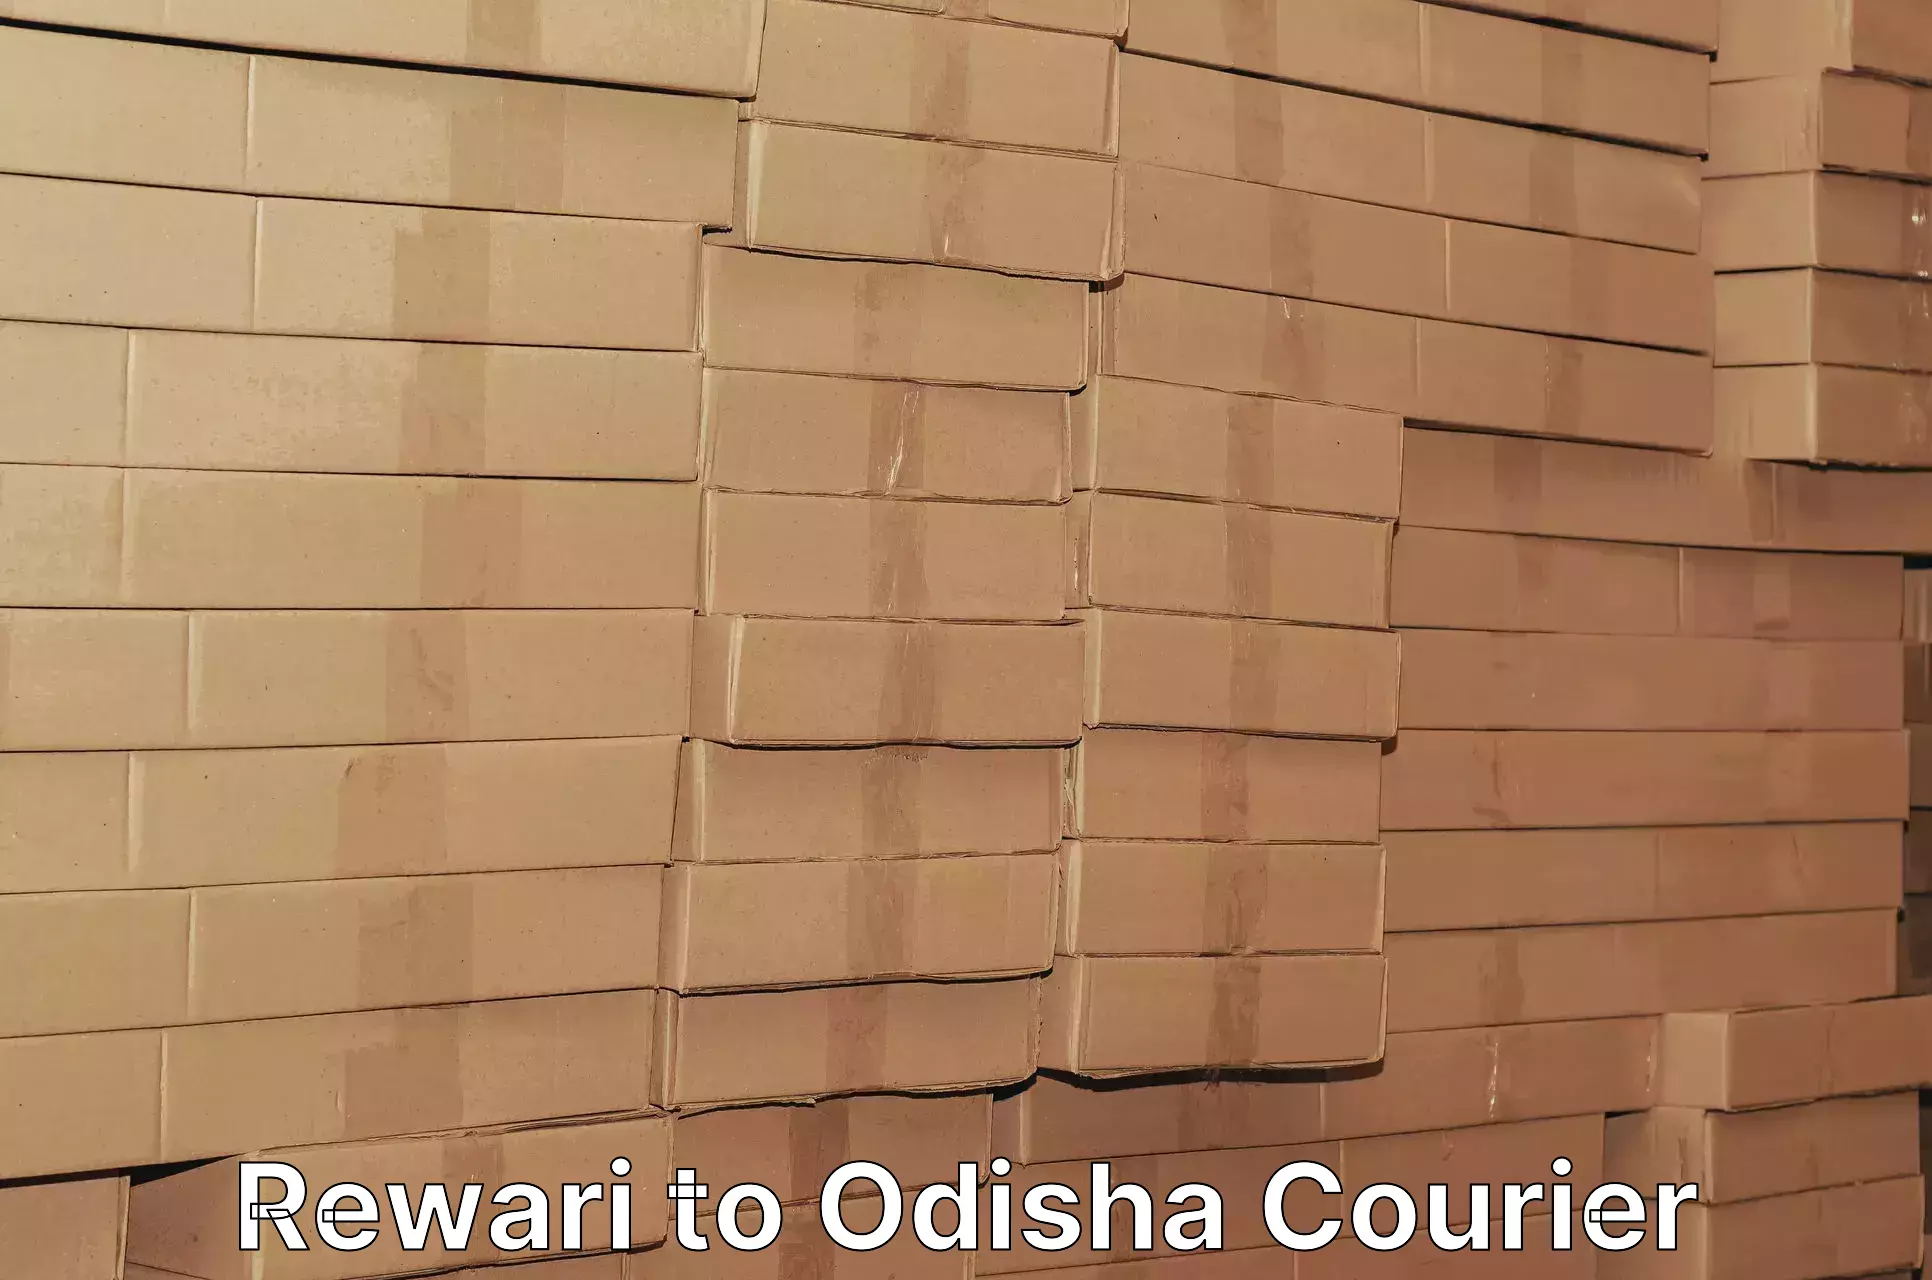 Customizable delivery plans Rewari to Odisha